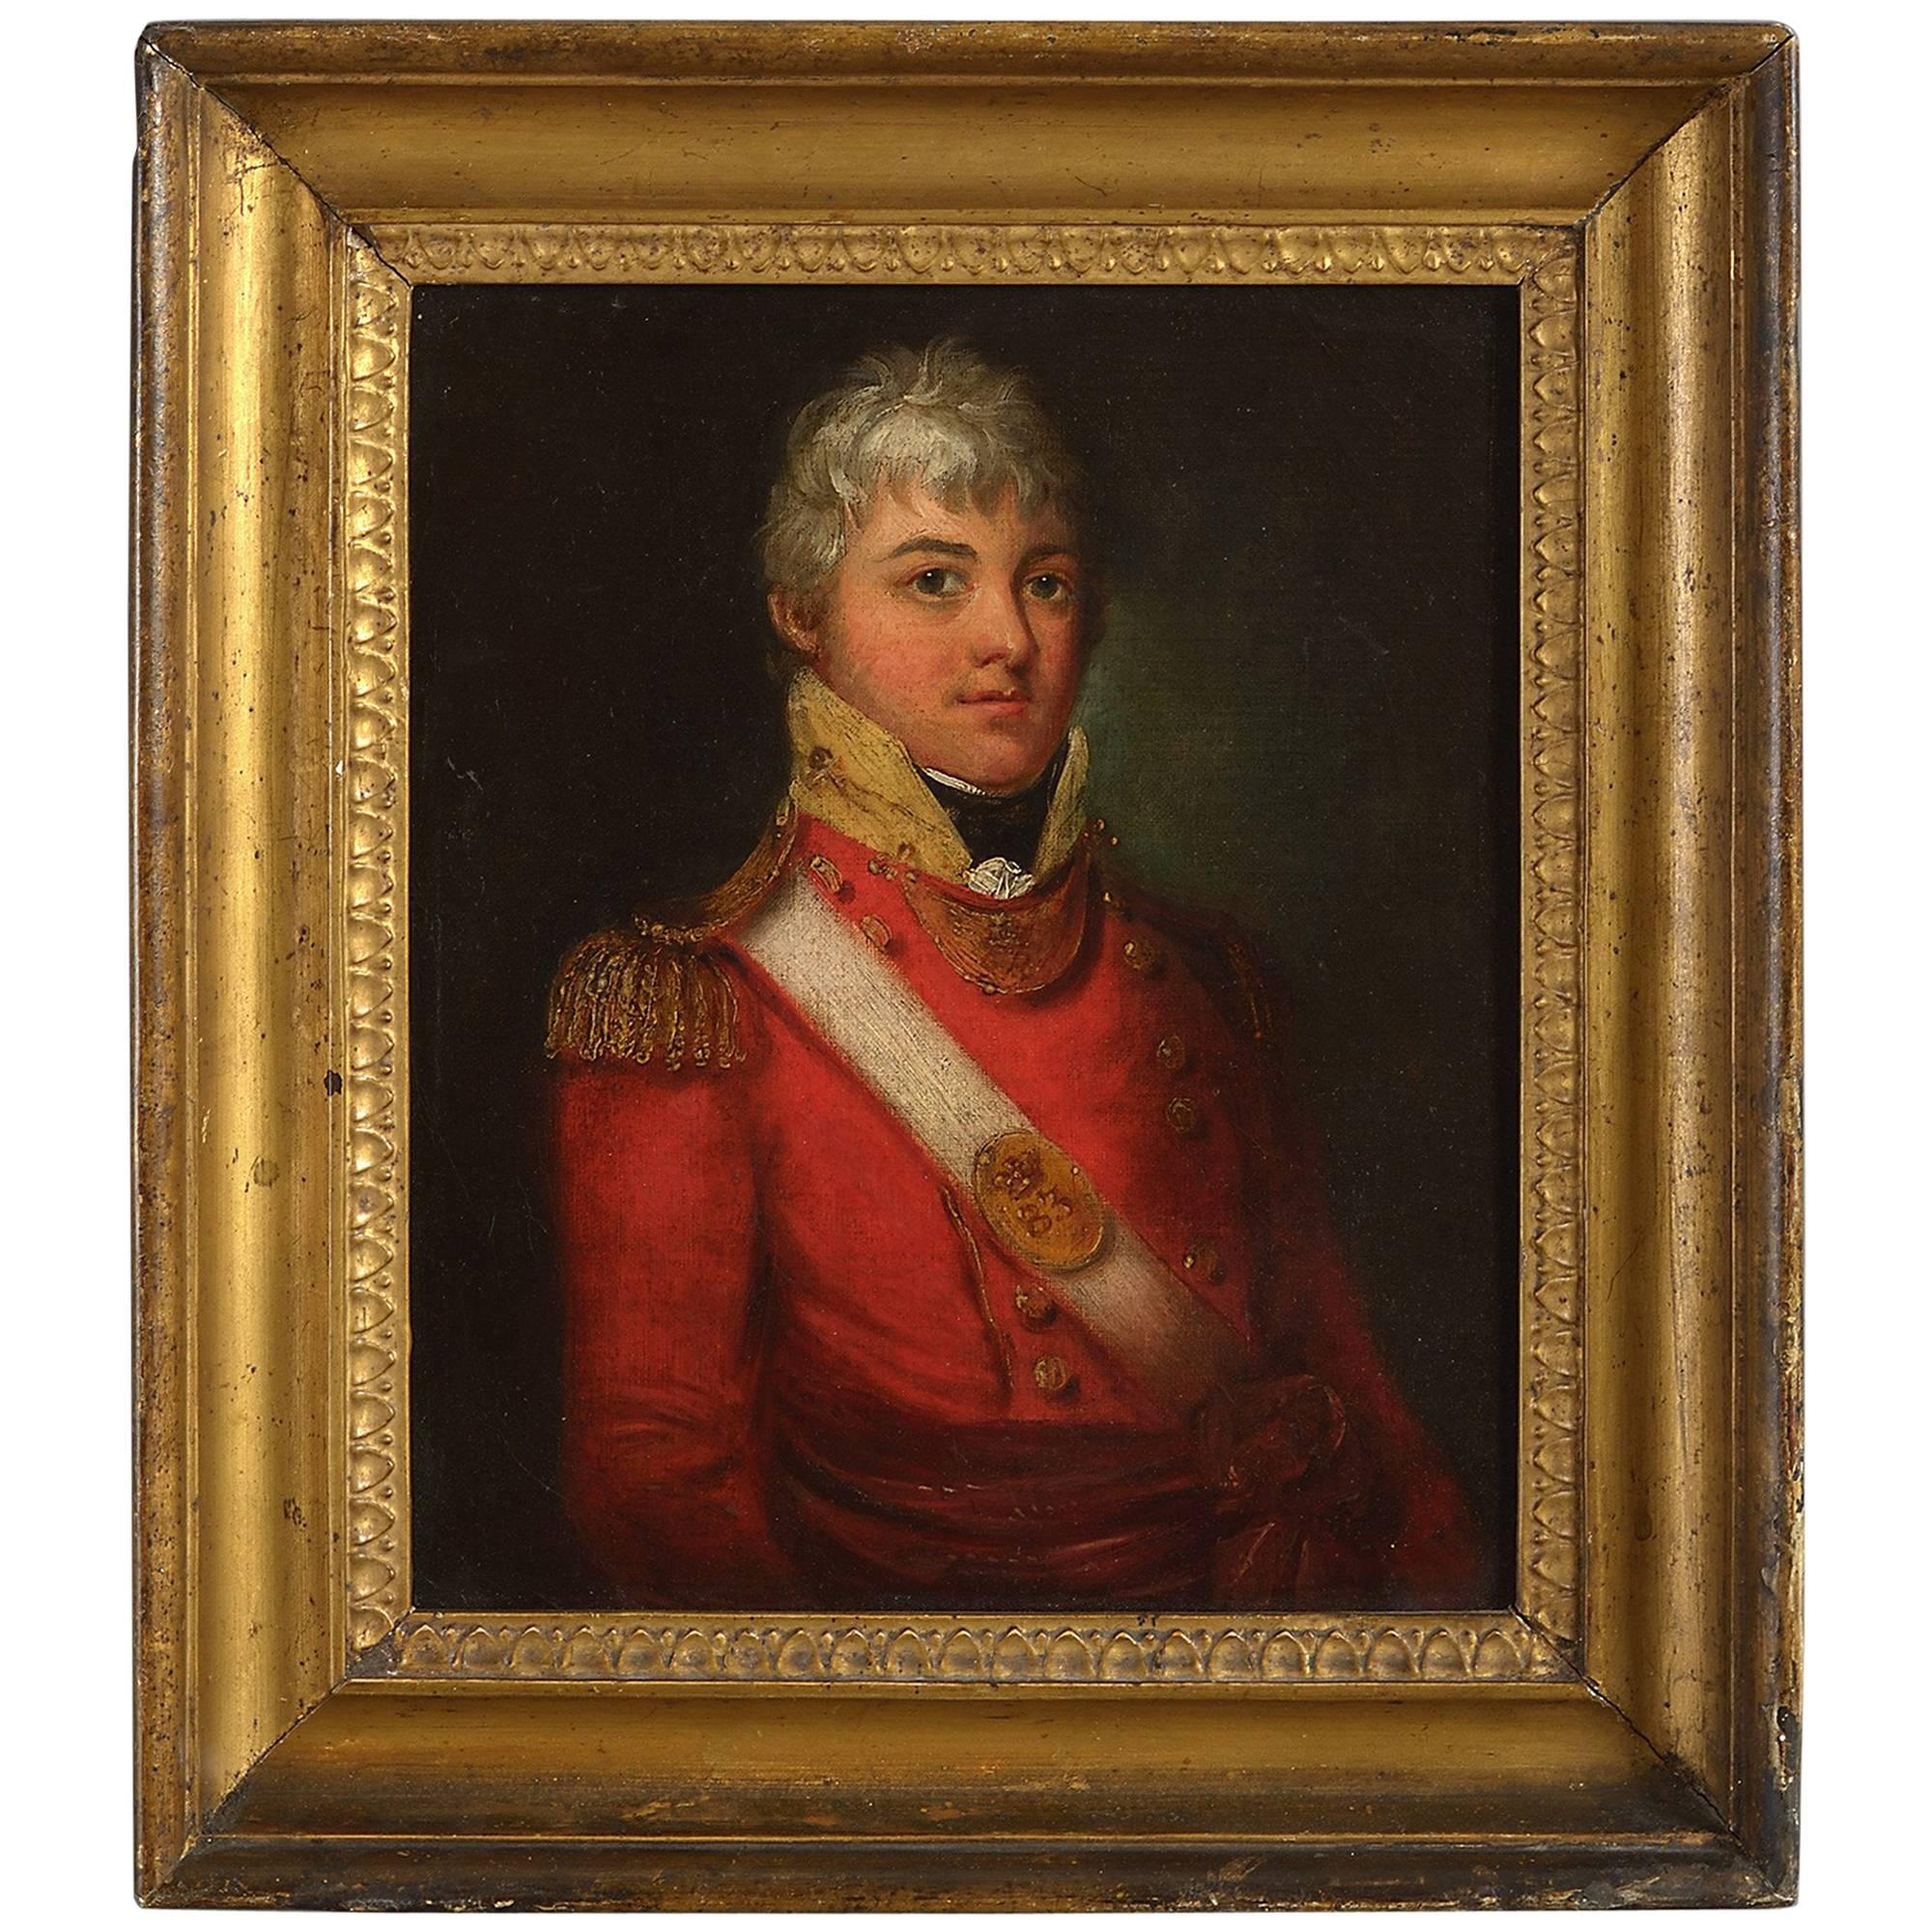 Portrait of Major Thomas Summerfield Irishman, British army private 